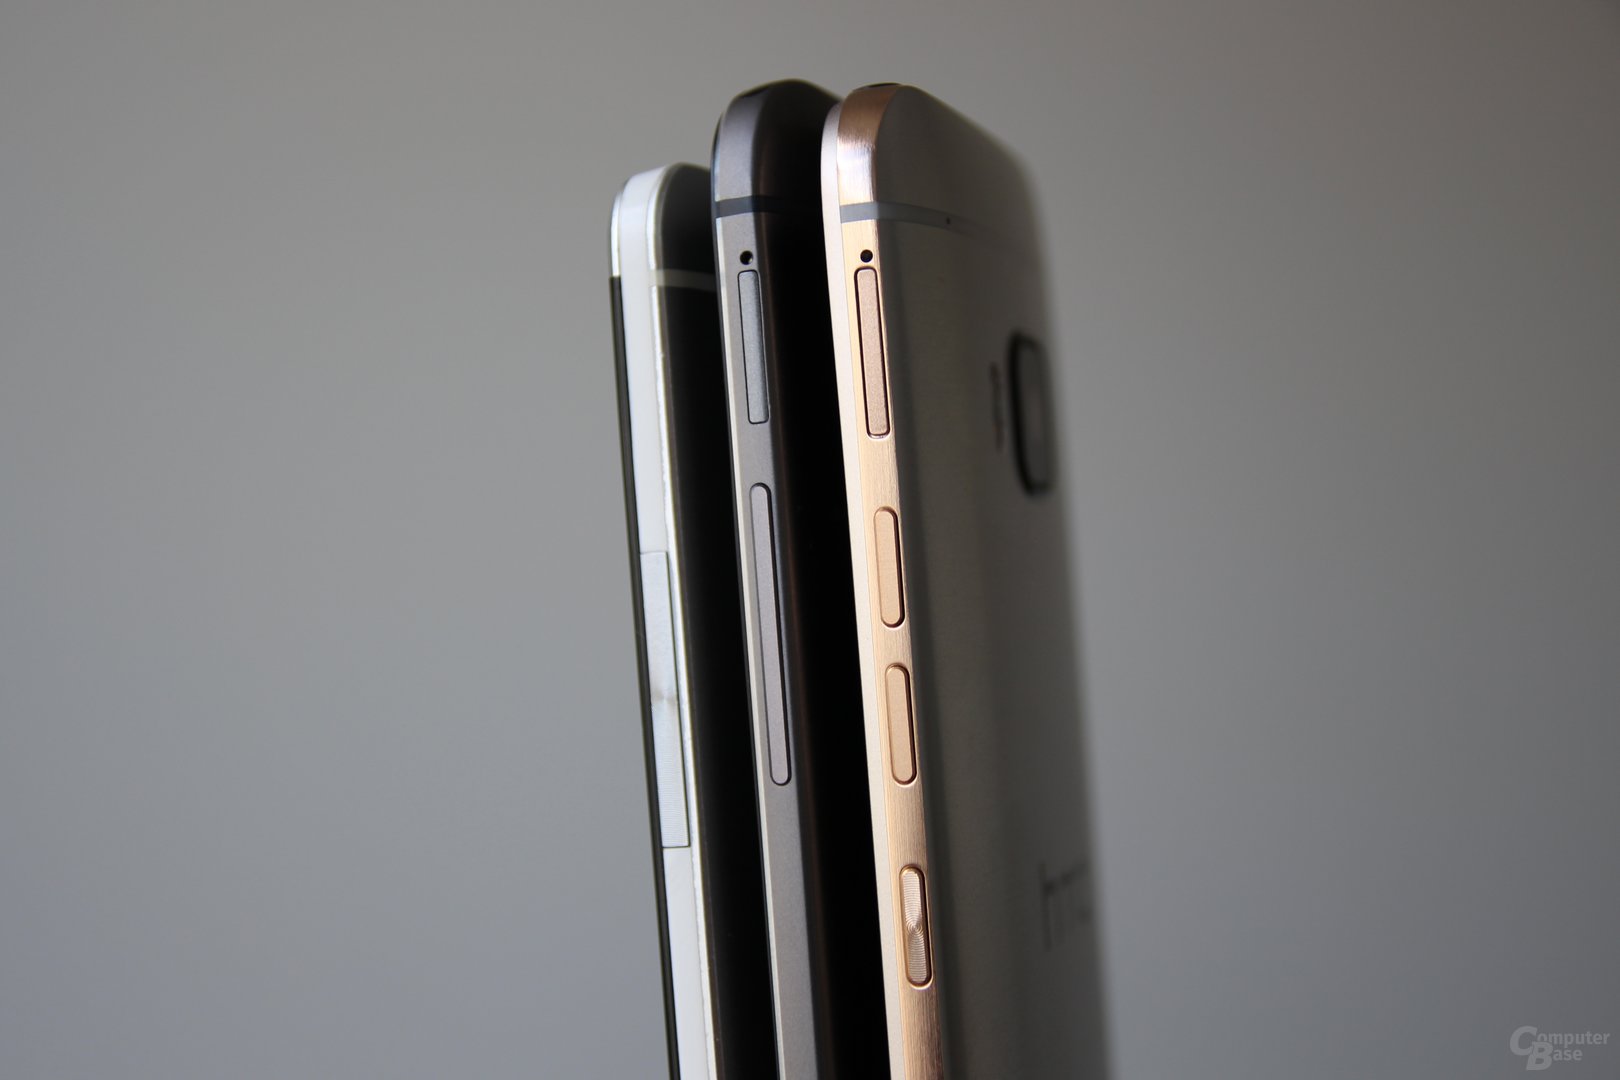 v.r.n.l.: HTC One M9, One (M8) und One